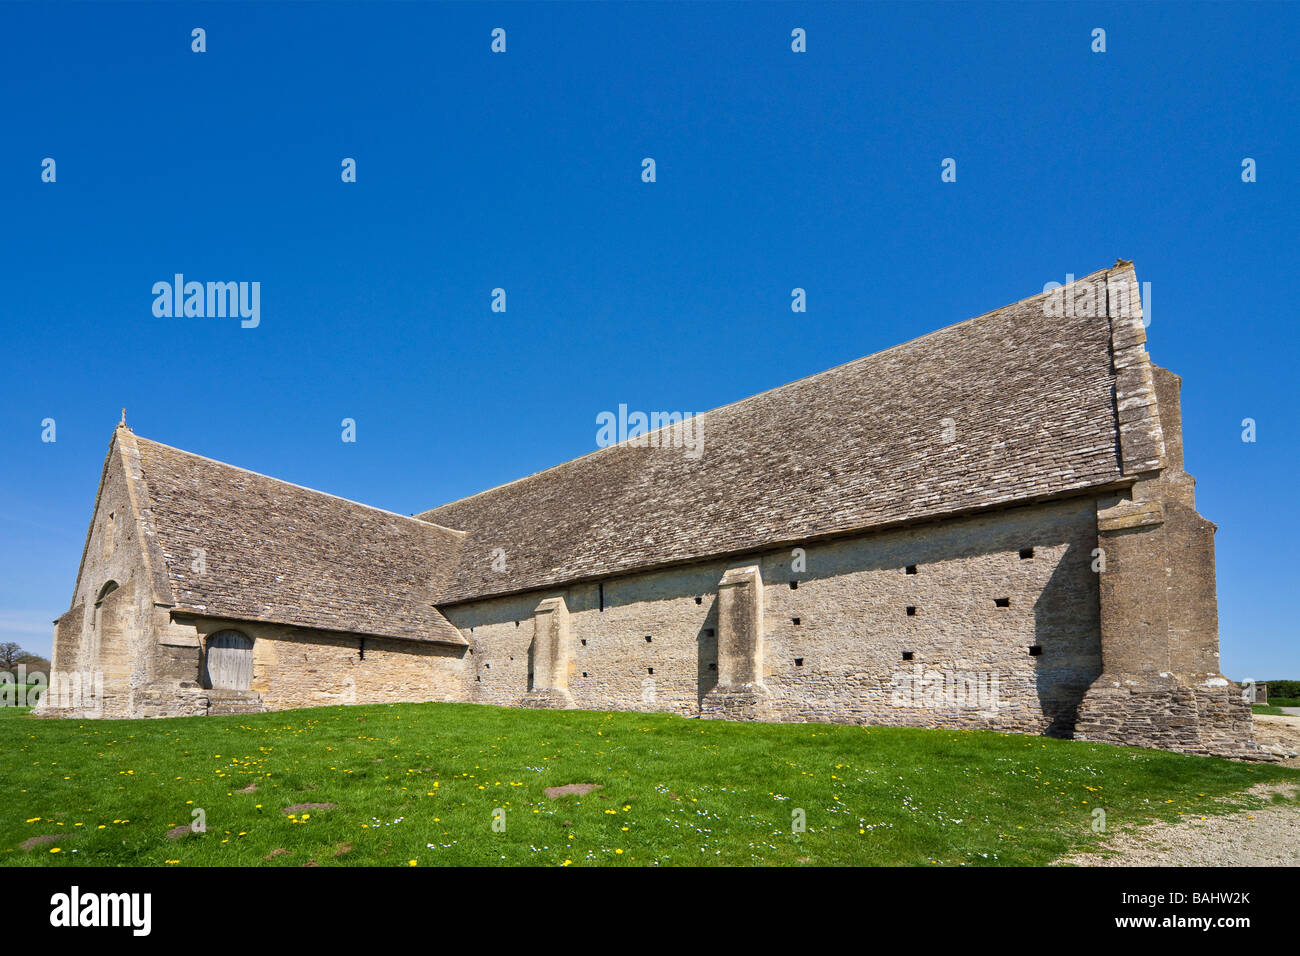 Great Coxwell 14th century medieval tithe or monastic grange storage barn near Faringdon Oxfordshire England UK JMH3783 Stock Photo